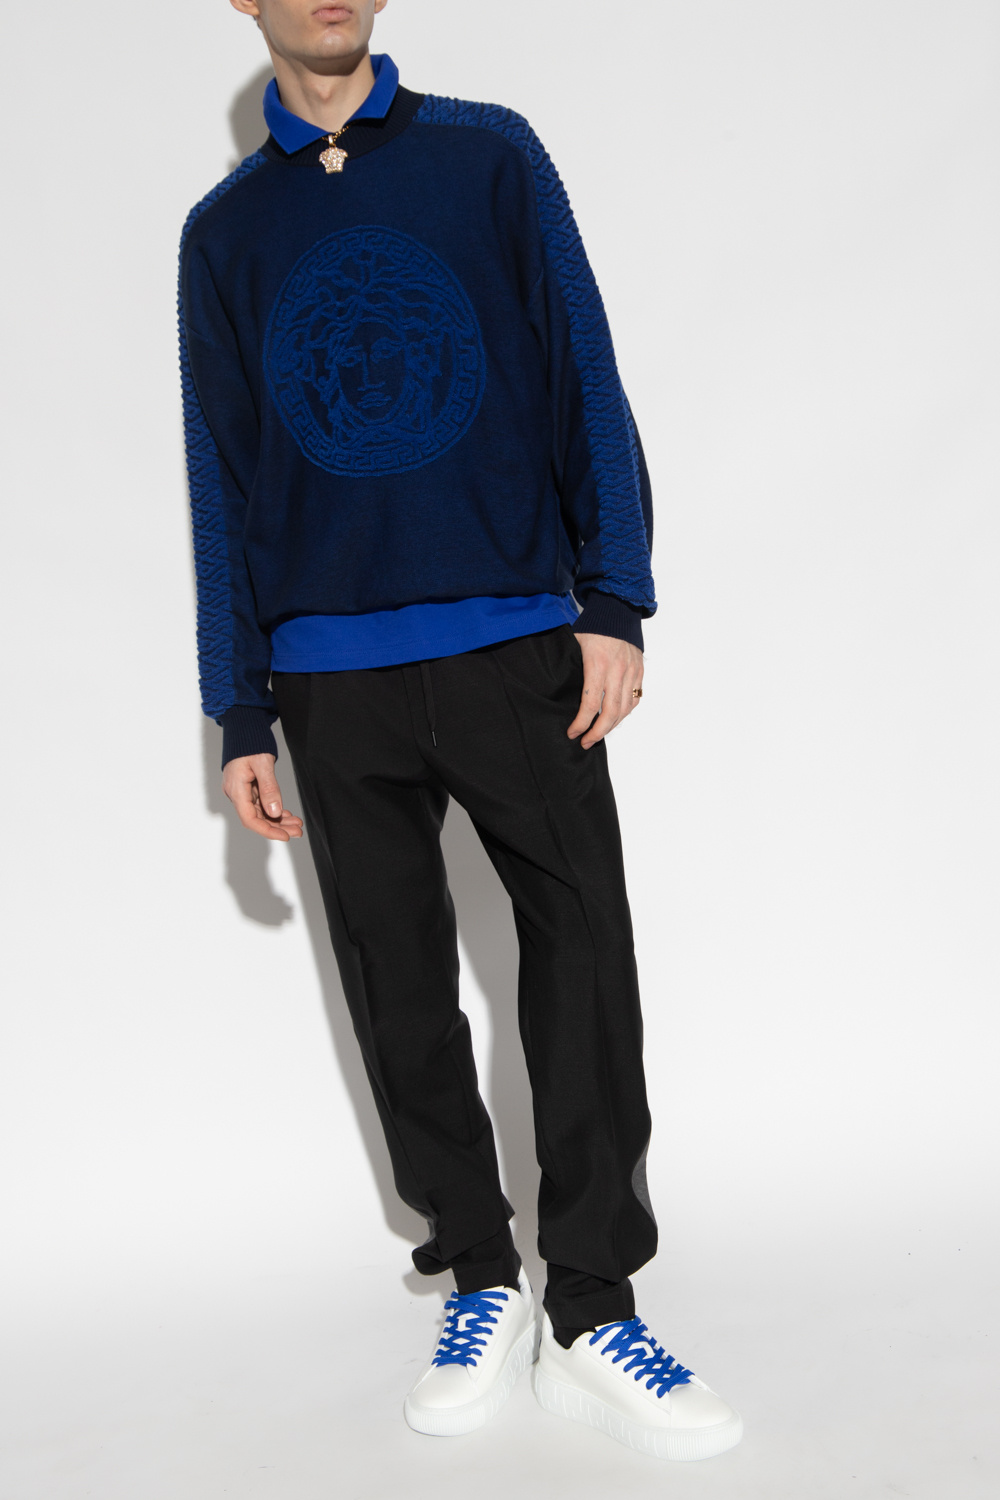 Versace Tommy Hilfiger x Timberland Unisex Puffer Jacket